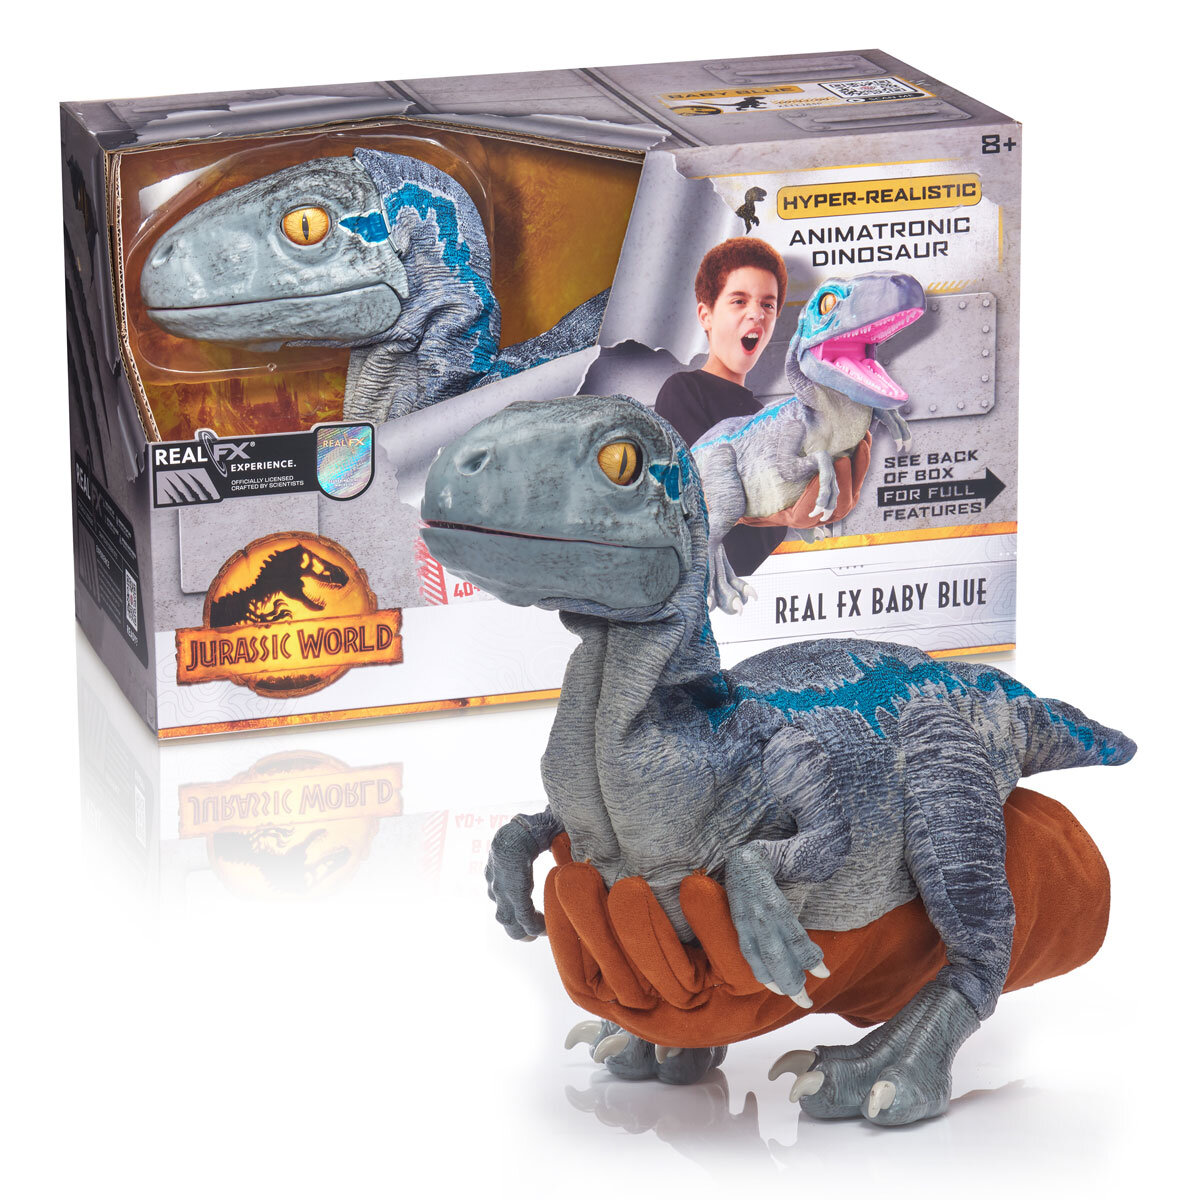 Buy Animatronic Dinosaur Item & Box Image at Costco.co.uk